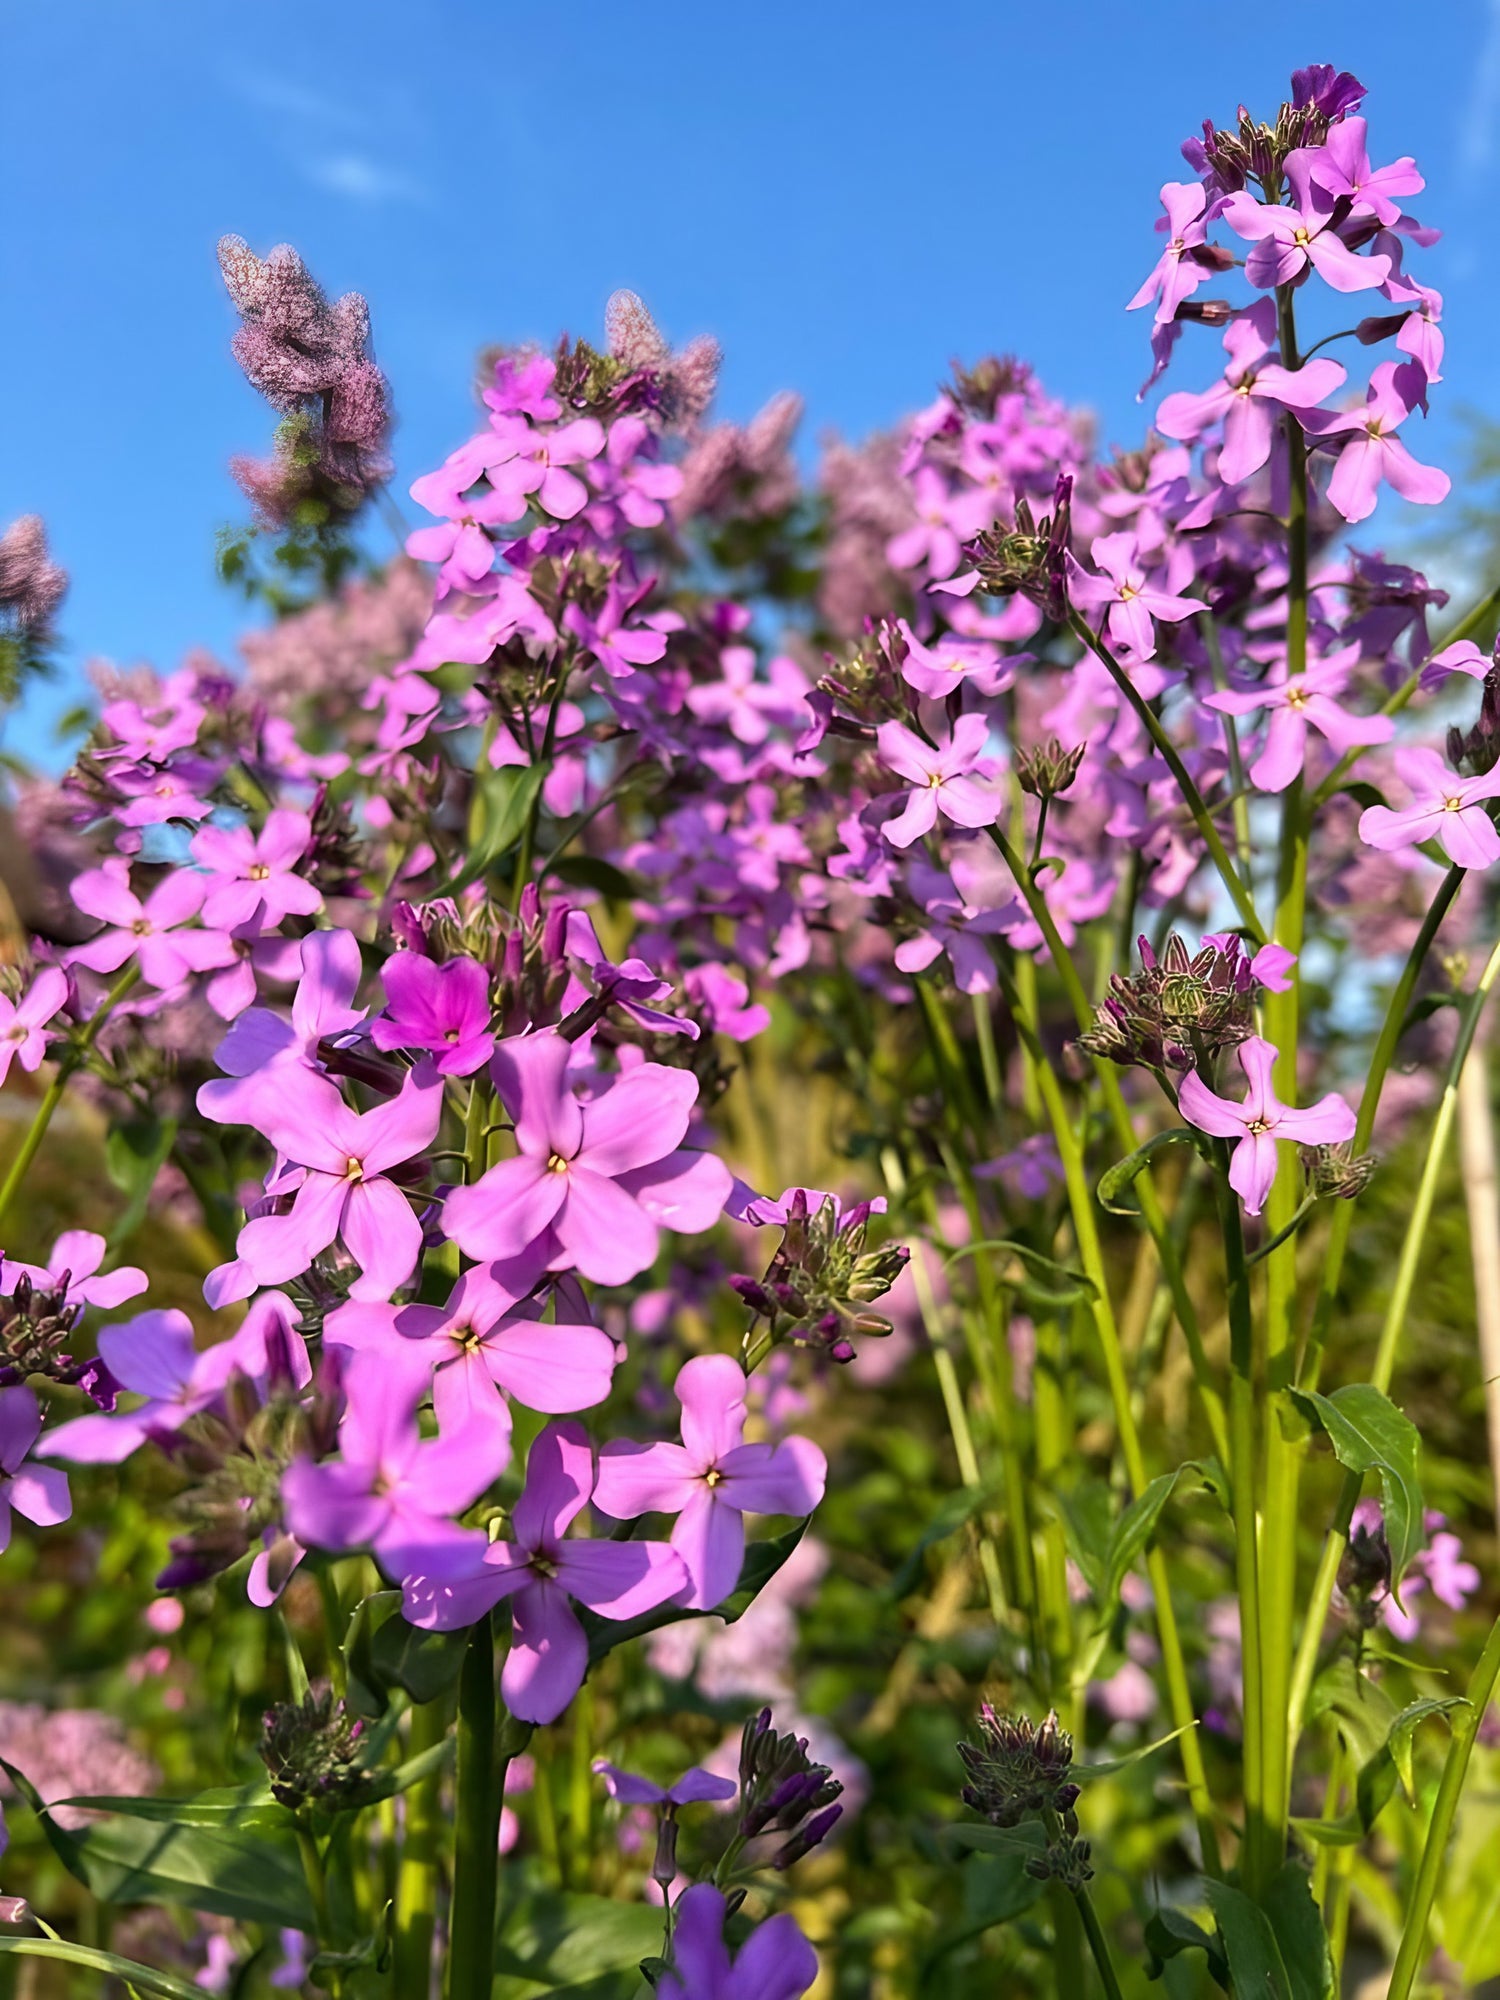 Sunlit Hesperis matronalis Purple flowers against a clear blue sky